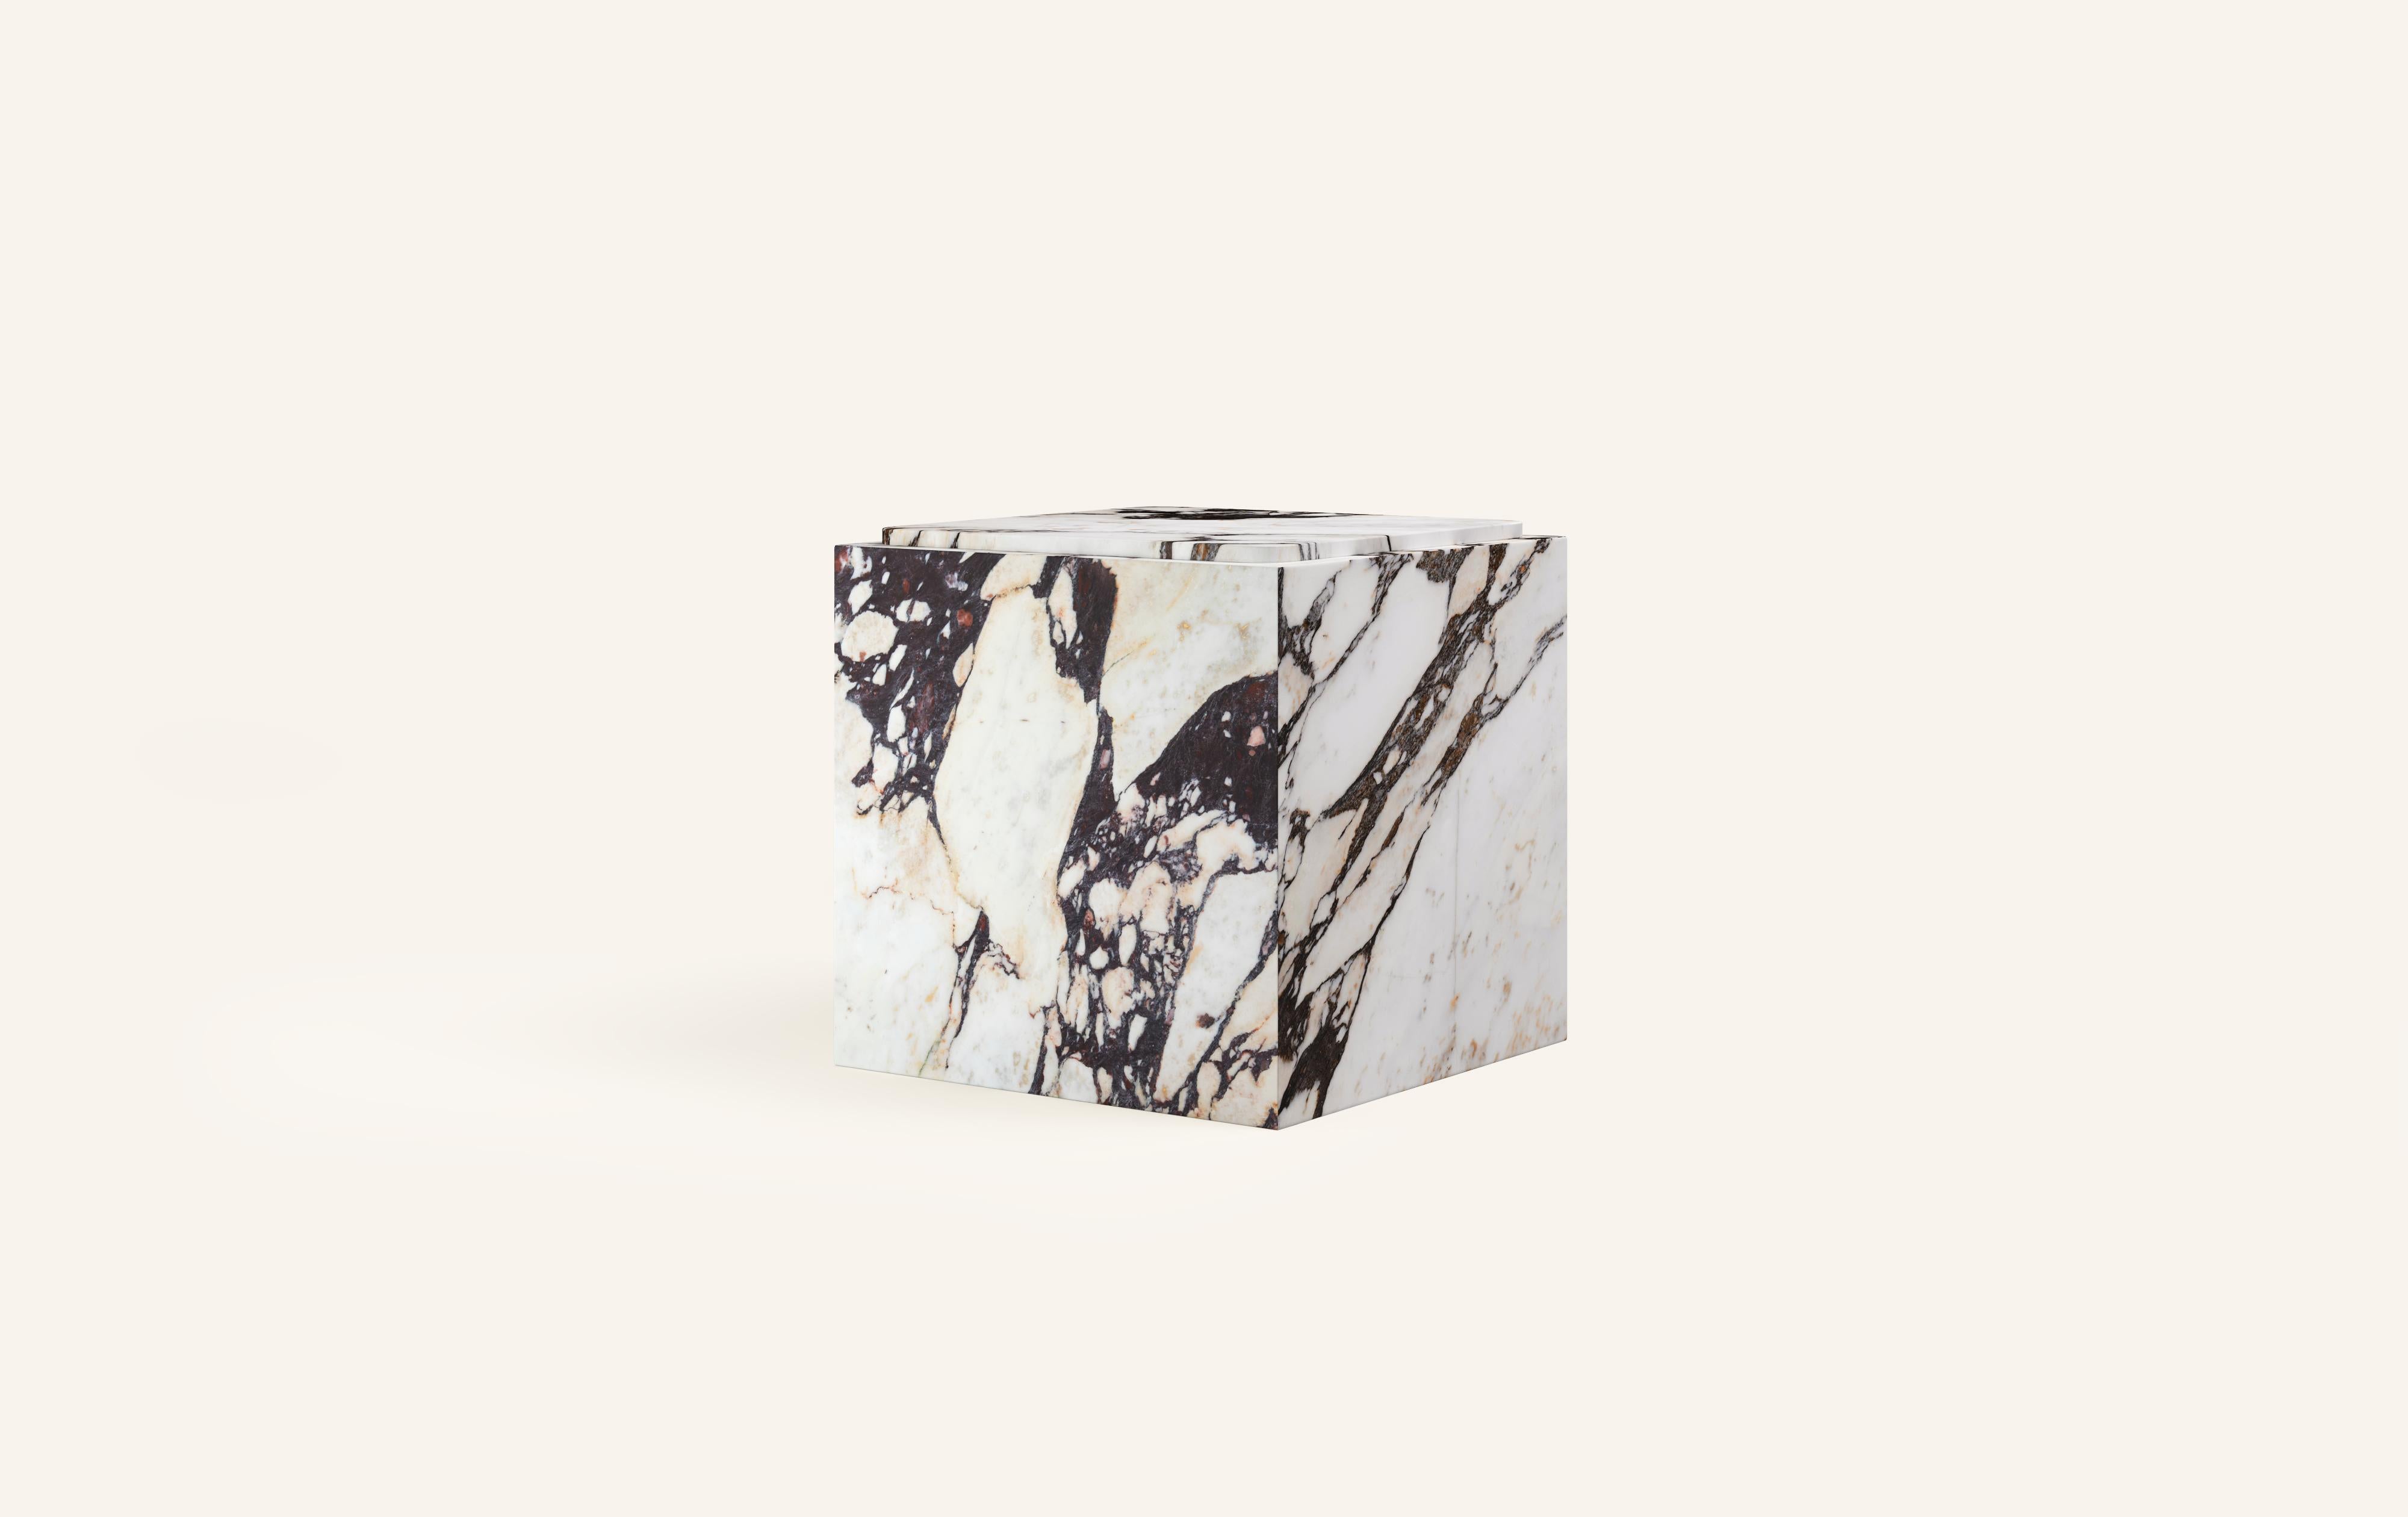 Organic Modern FORM(LA) Cubo Square Side Table 18”L x 18